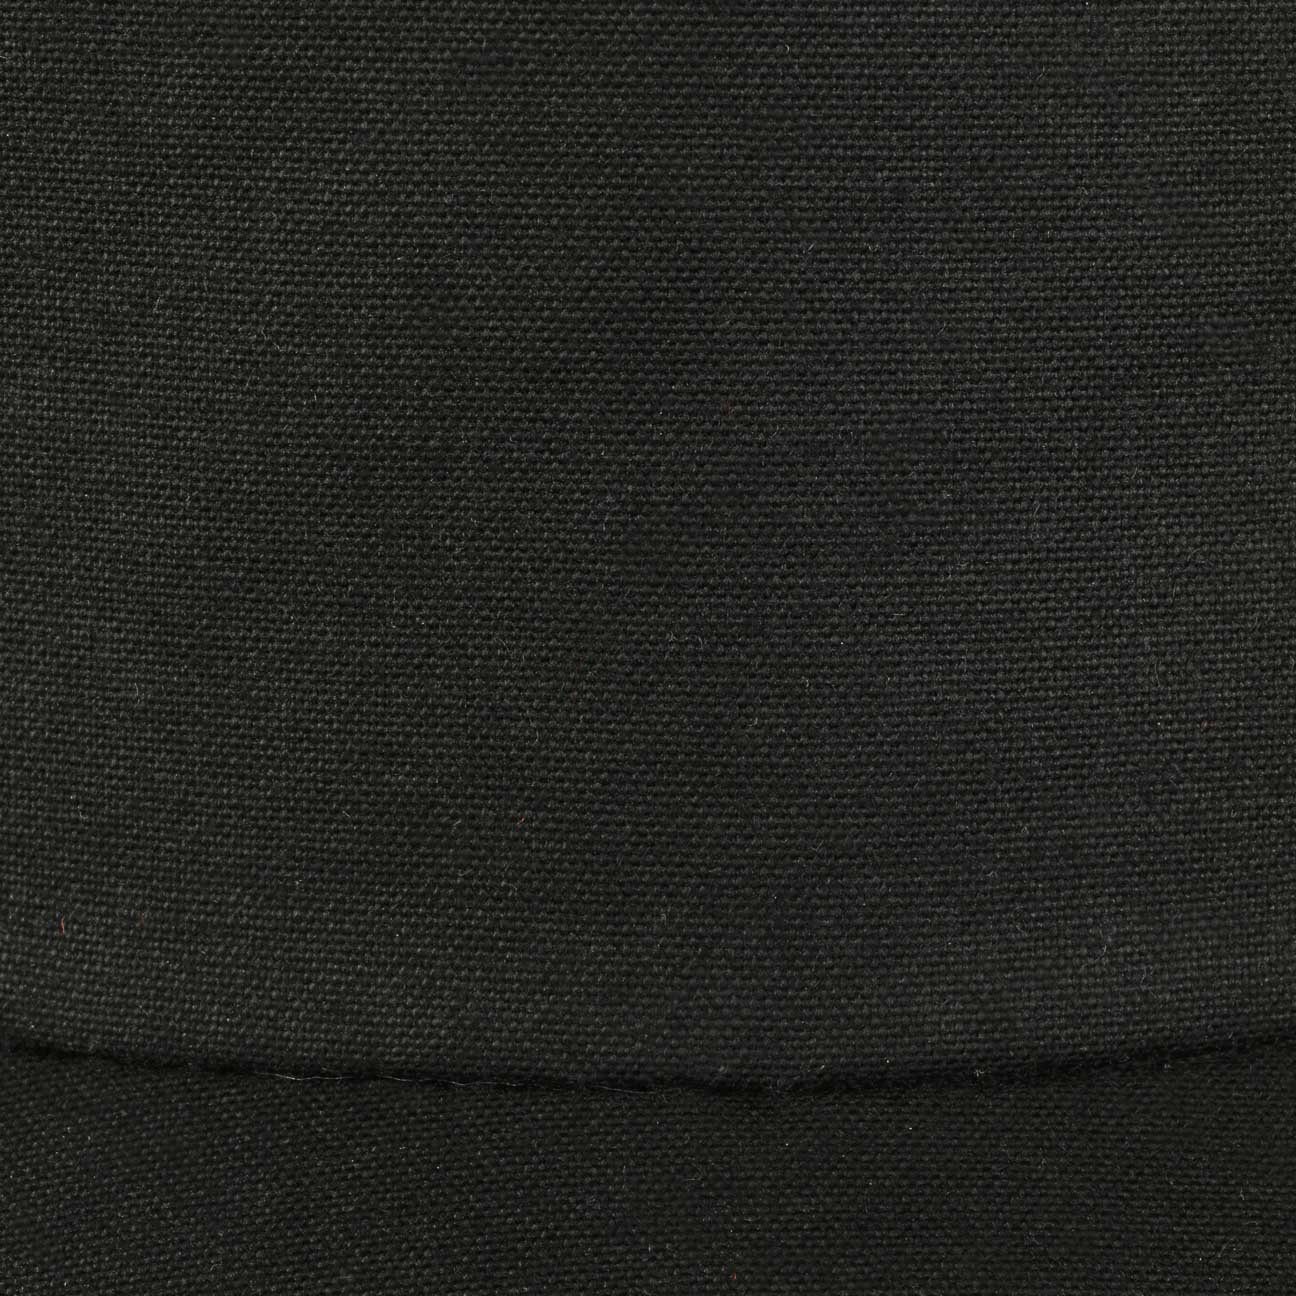 Lierys Baseball Cap (1-St) Baseballcap in schwarz Italy mit Made Schirm